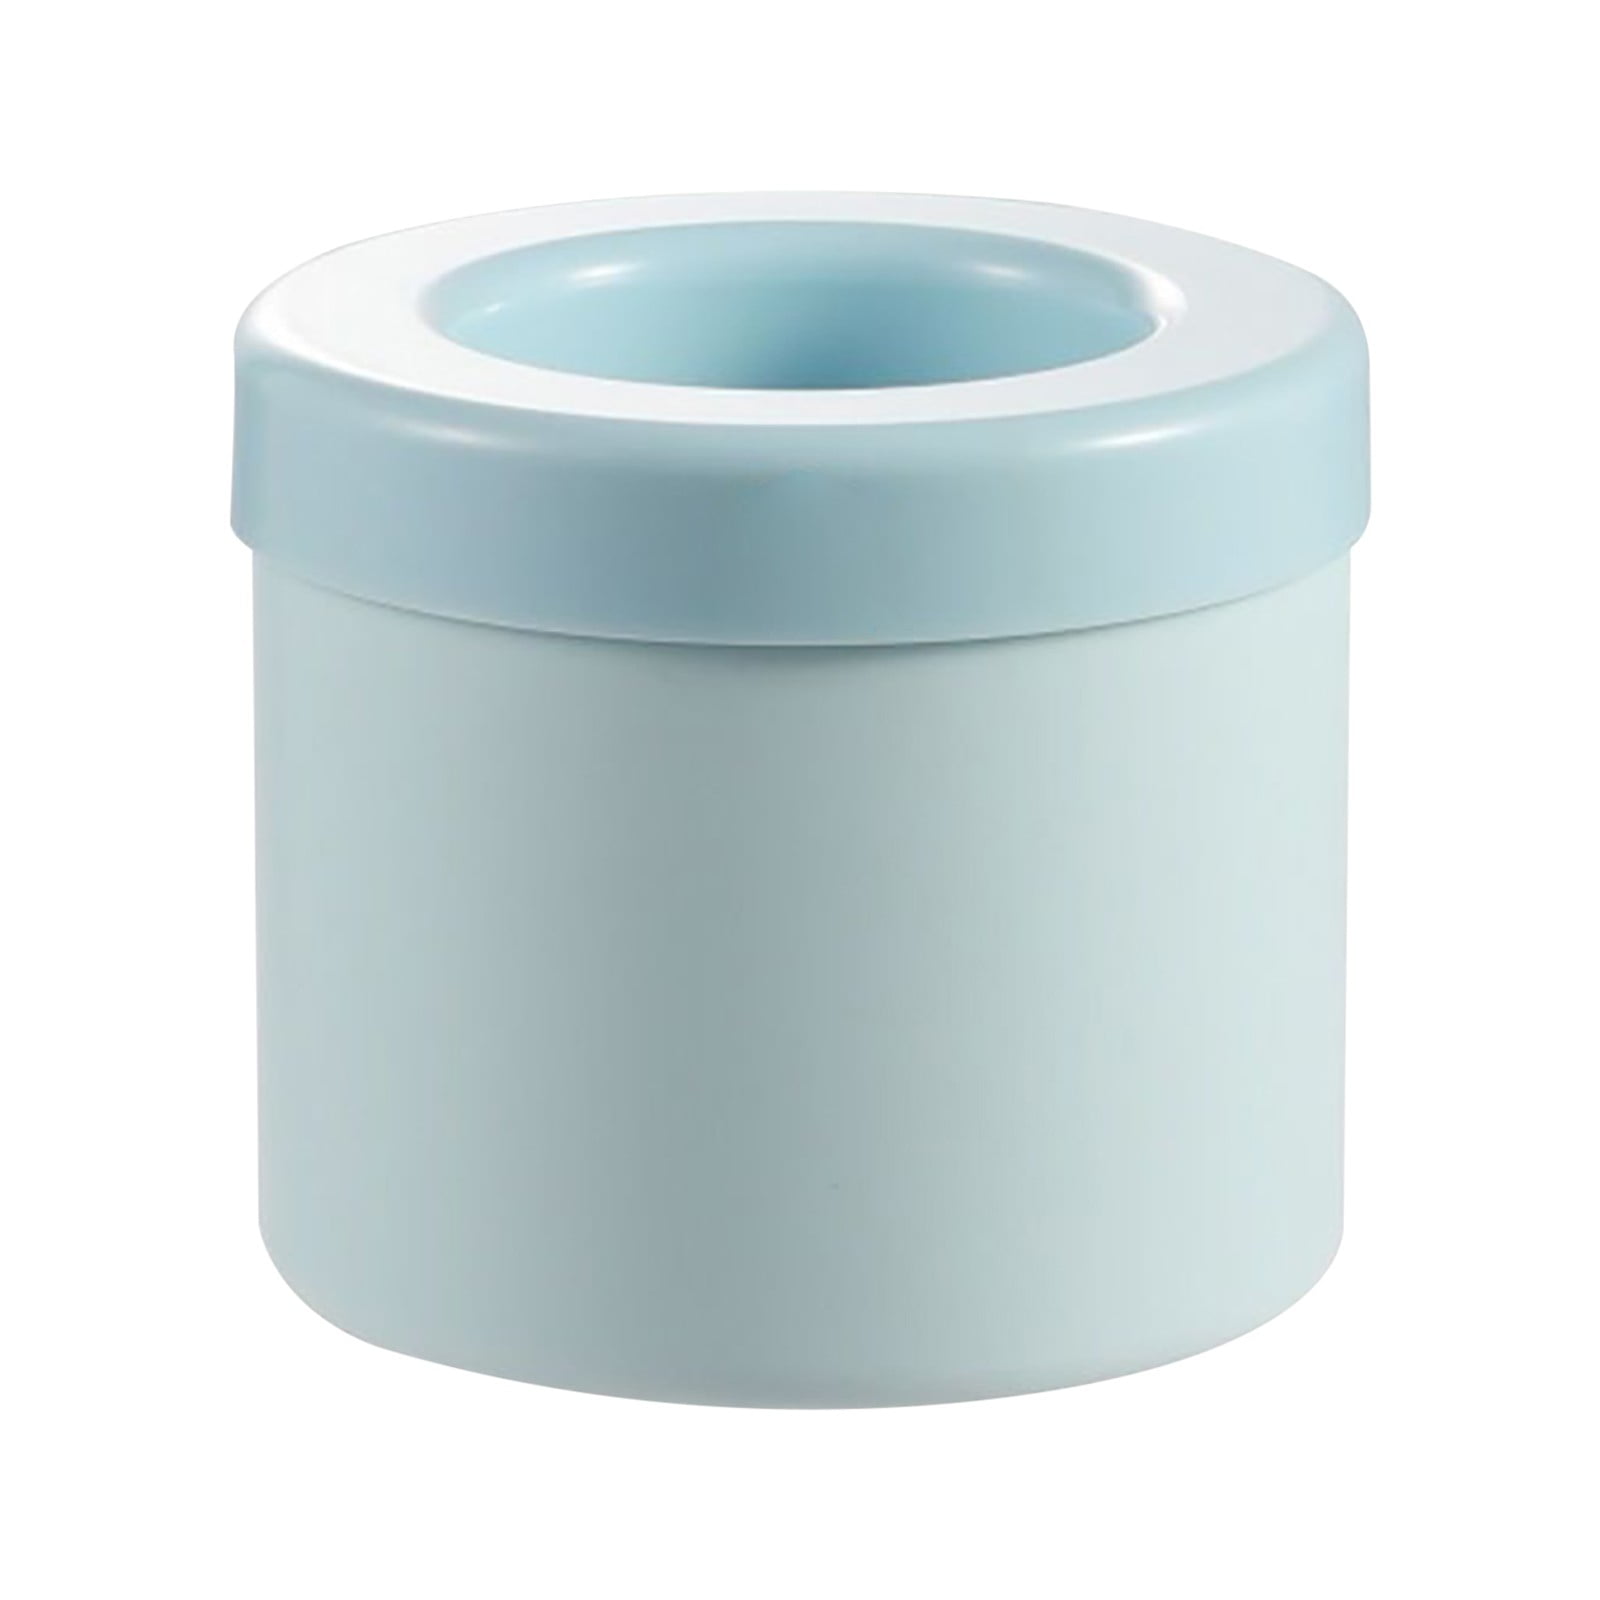 Cubetera Hielera de Silicona Turquoise Large Ice Bucket with Lid